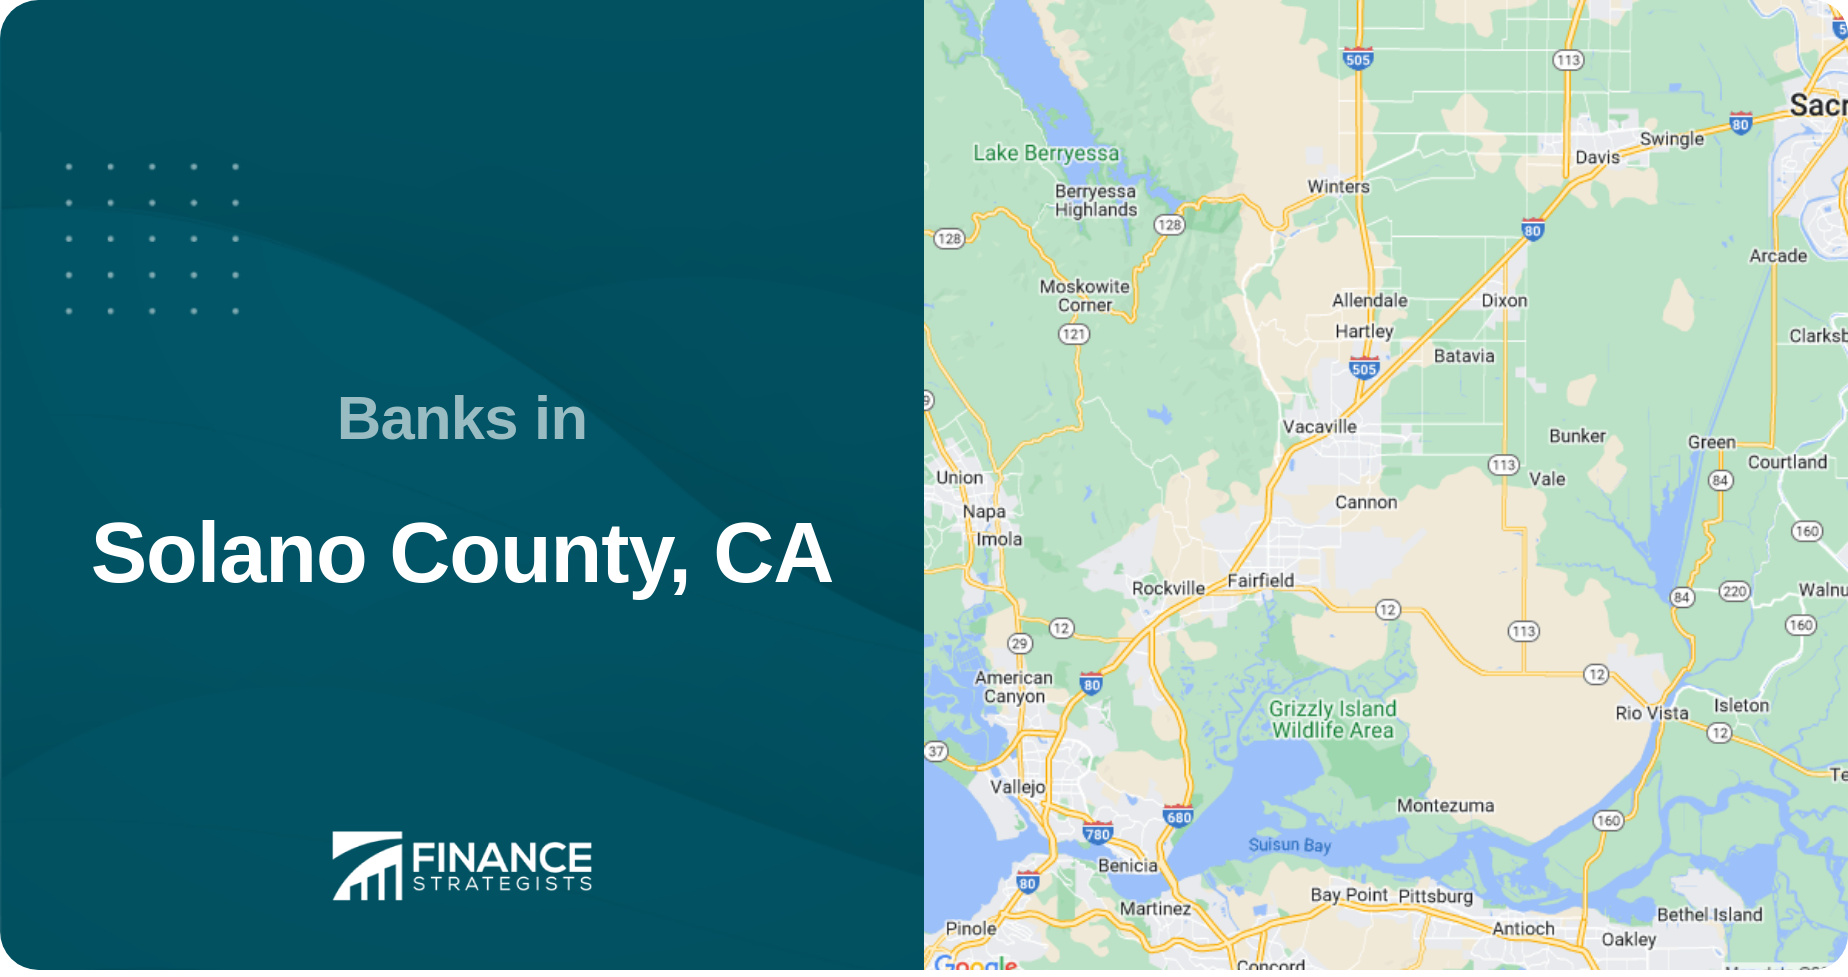 Banks in Solano County, CA